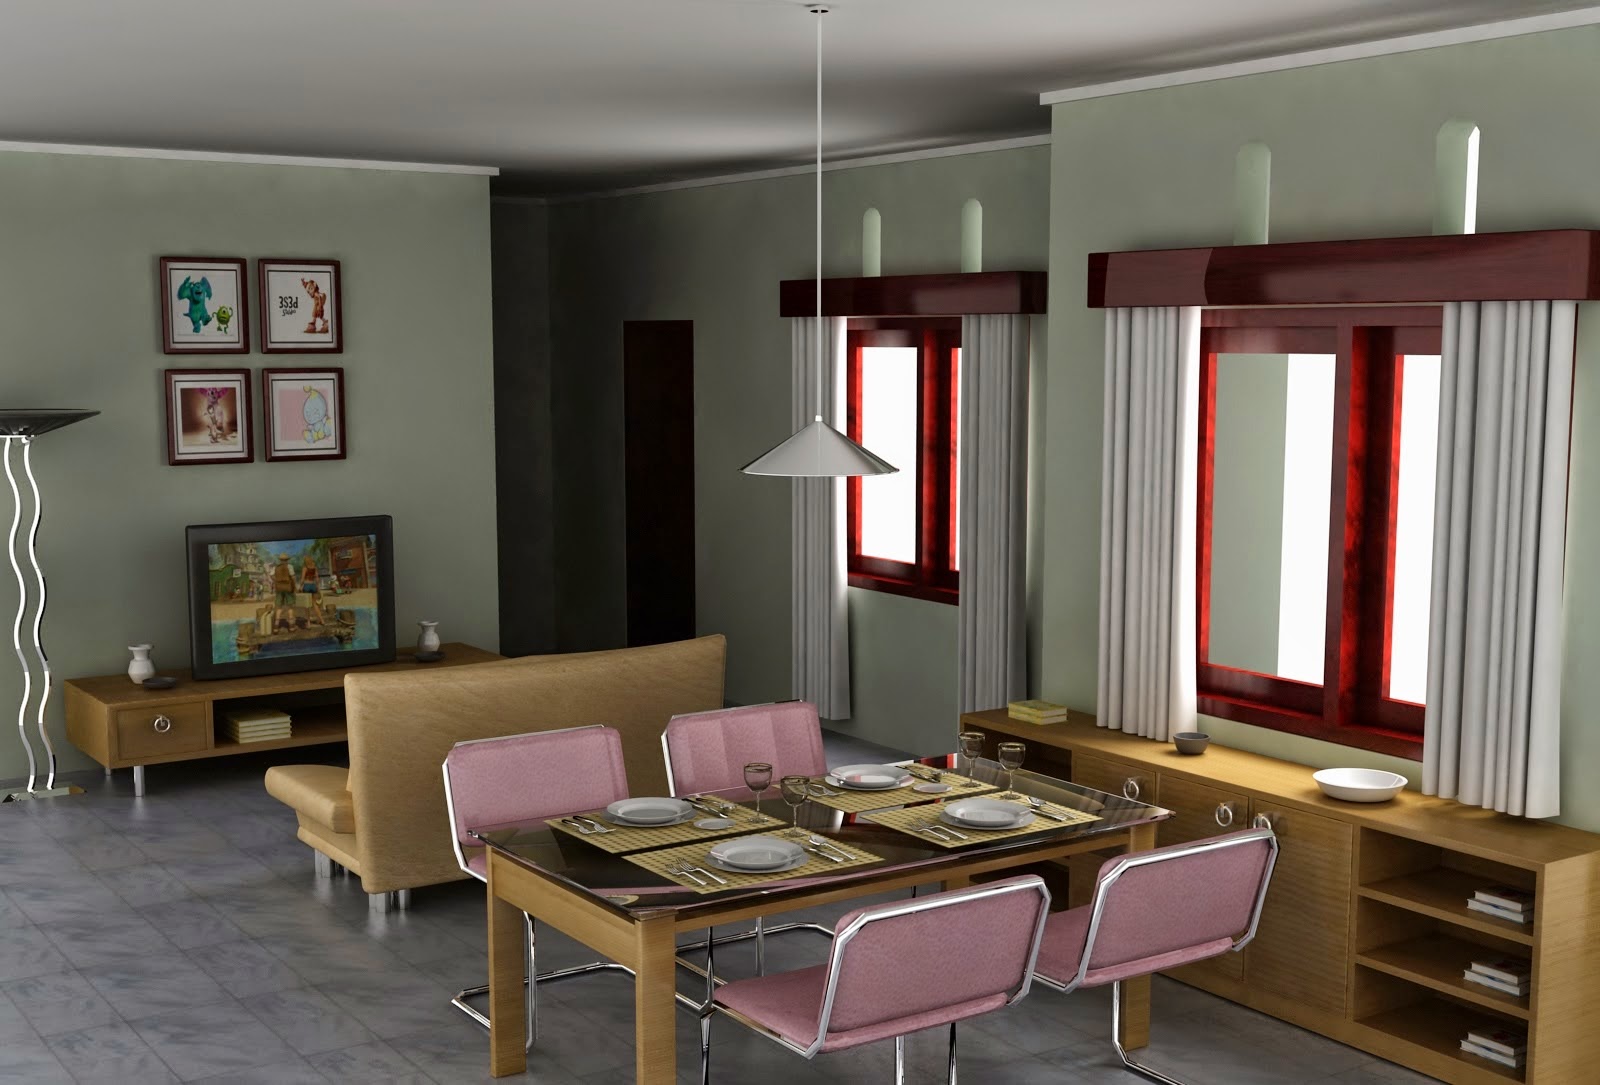 Contoh desain ruang keluarga minimalis kecil sederhana 